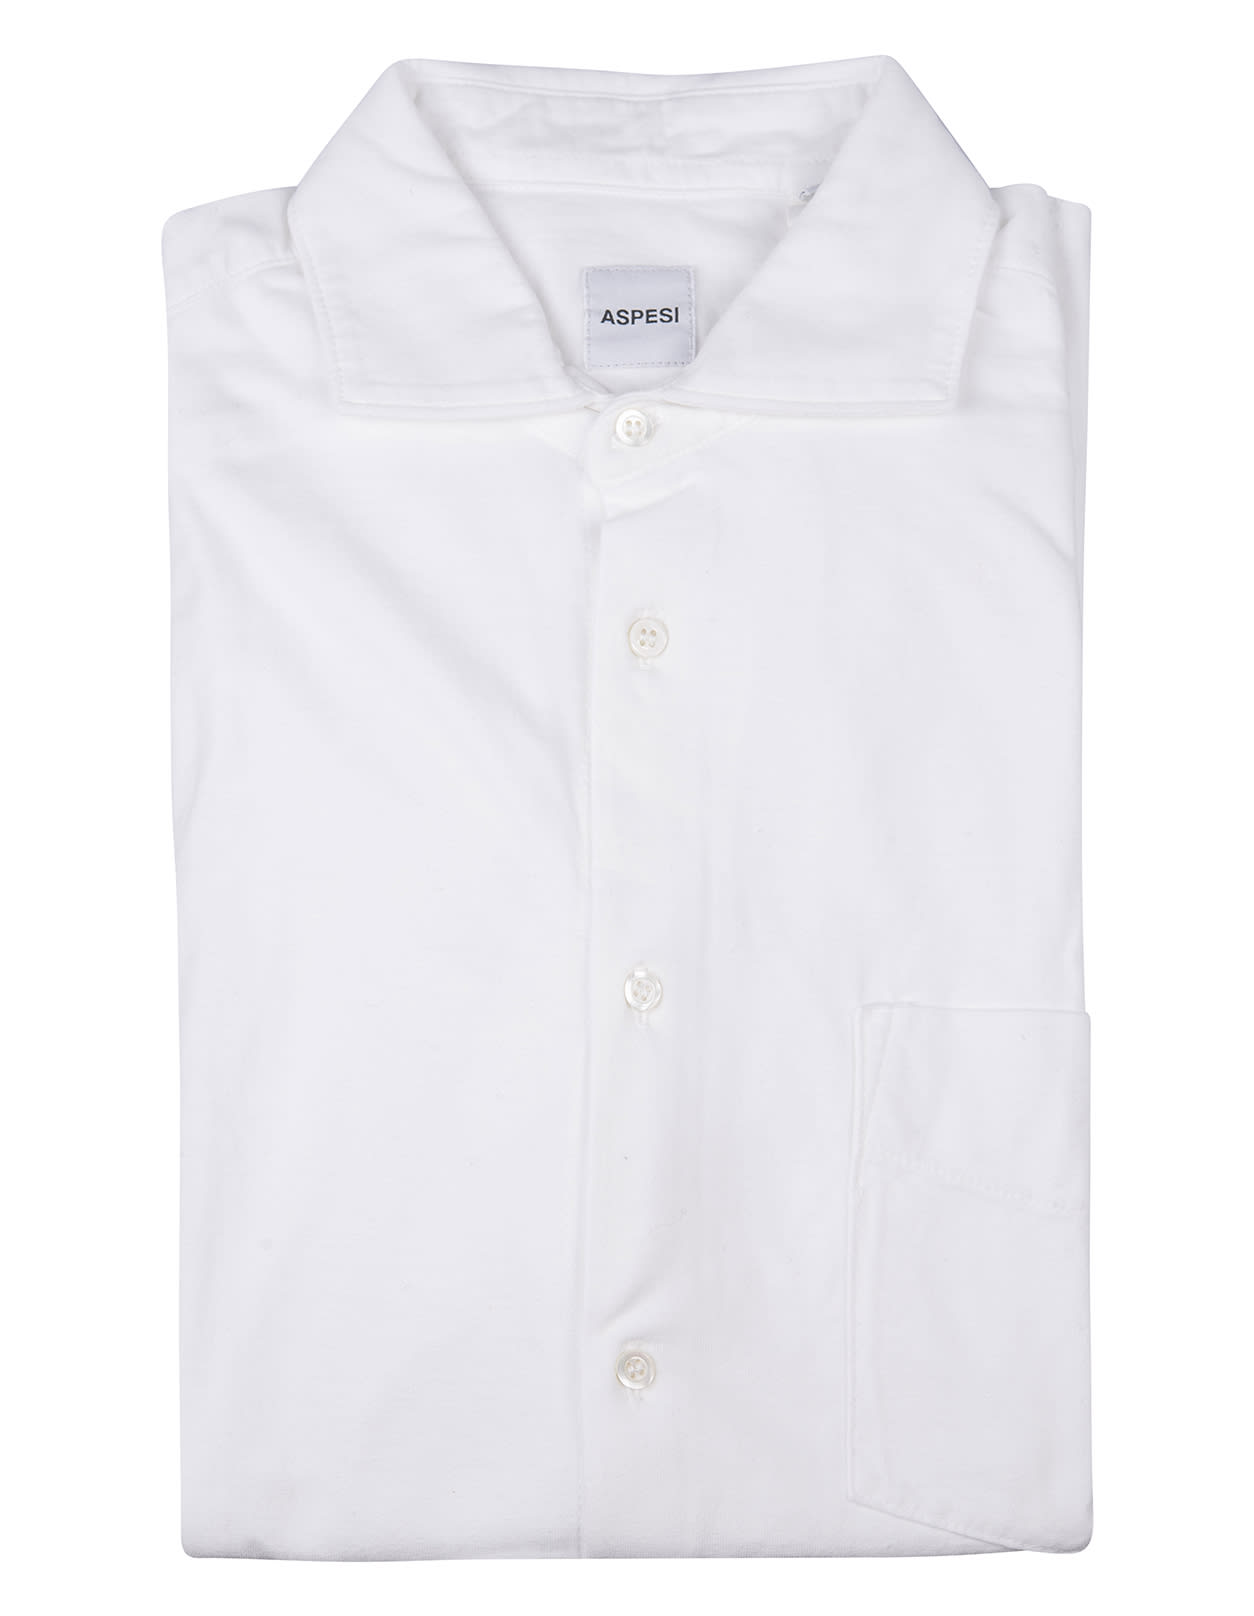 Aspesi Man Shirt In White Cotton Jersey